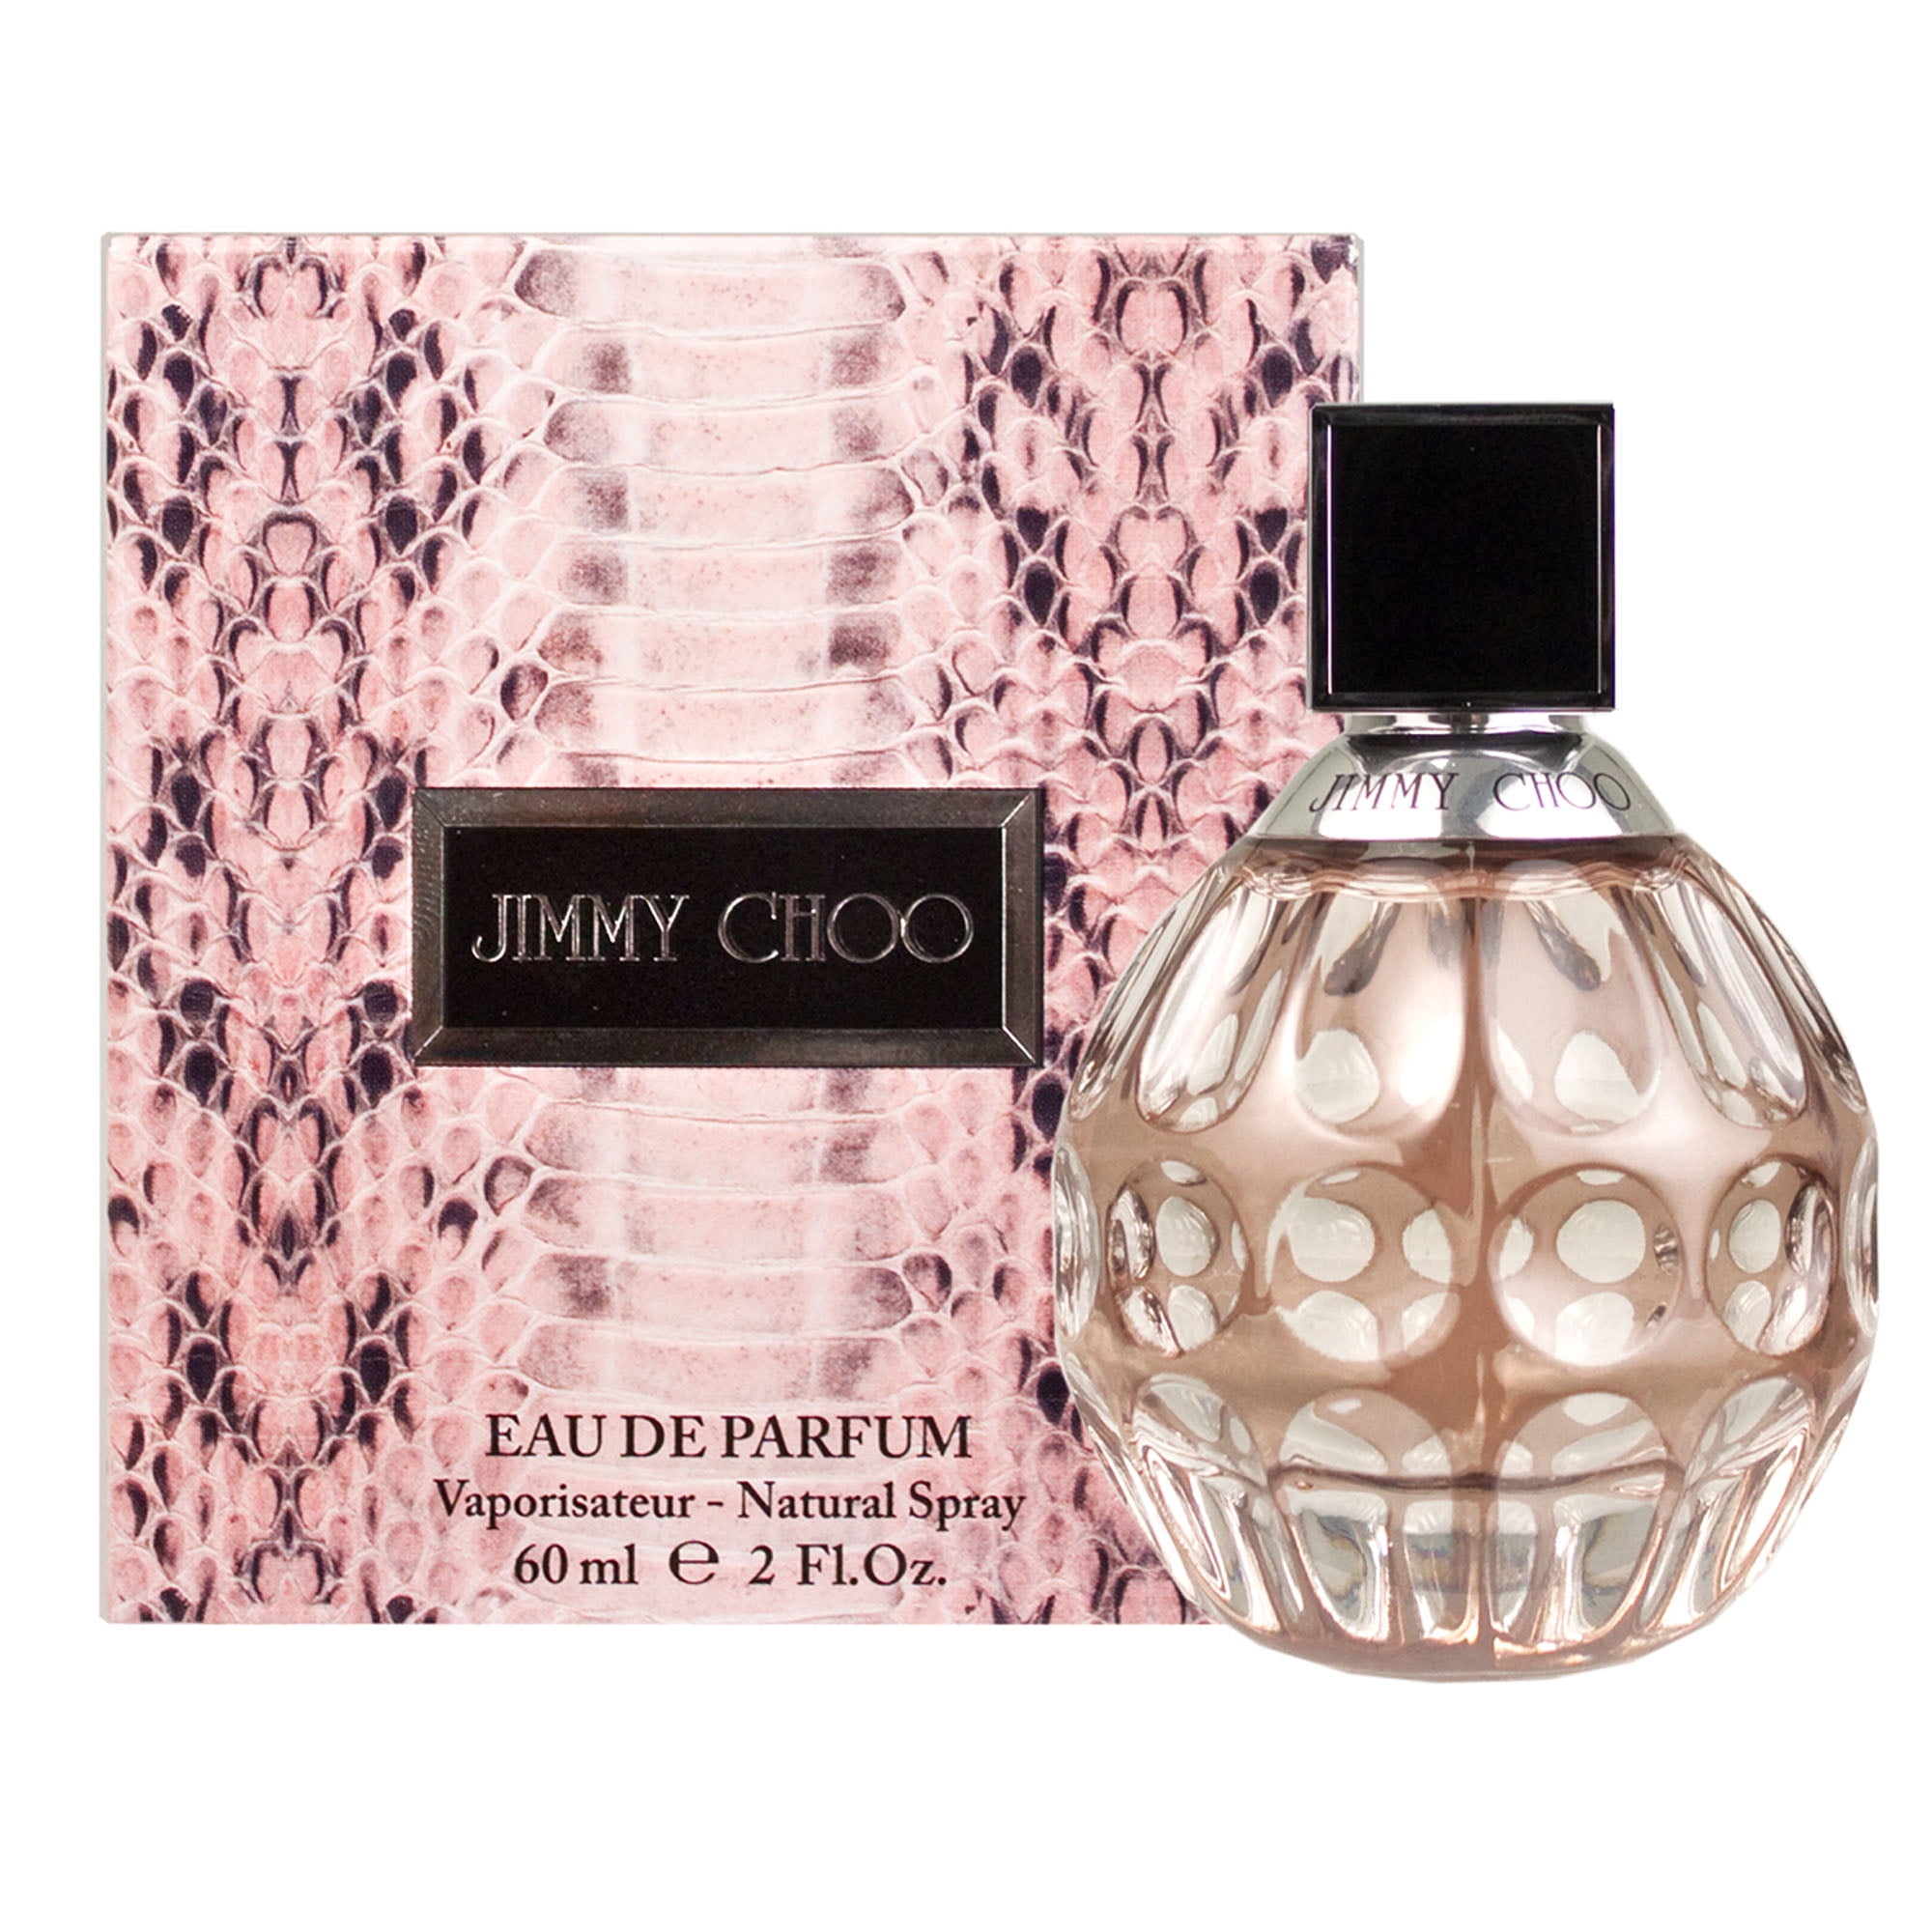 Jimmy Choo by Jimmy Choo 2 oz Eau de Parfum Spray / Women